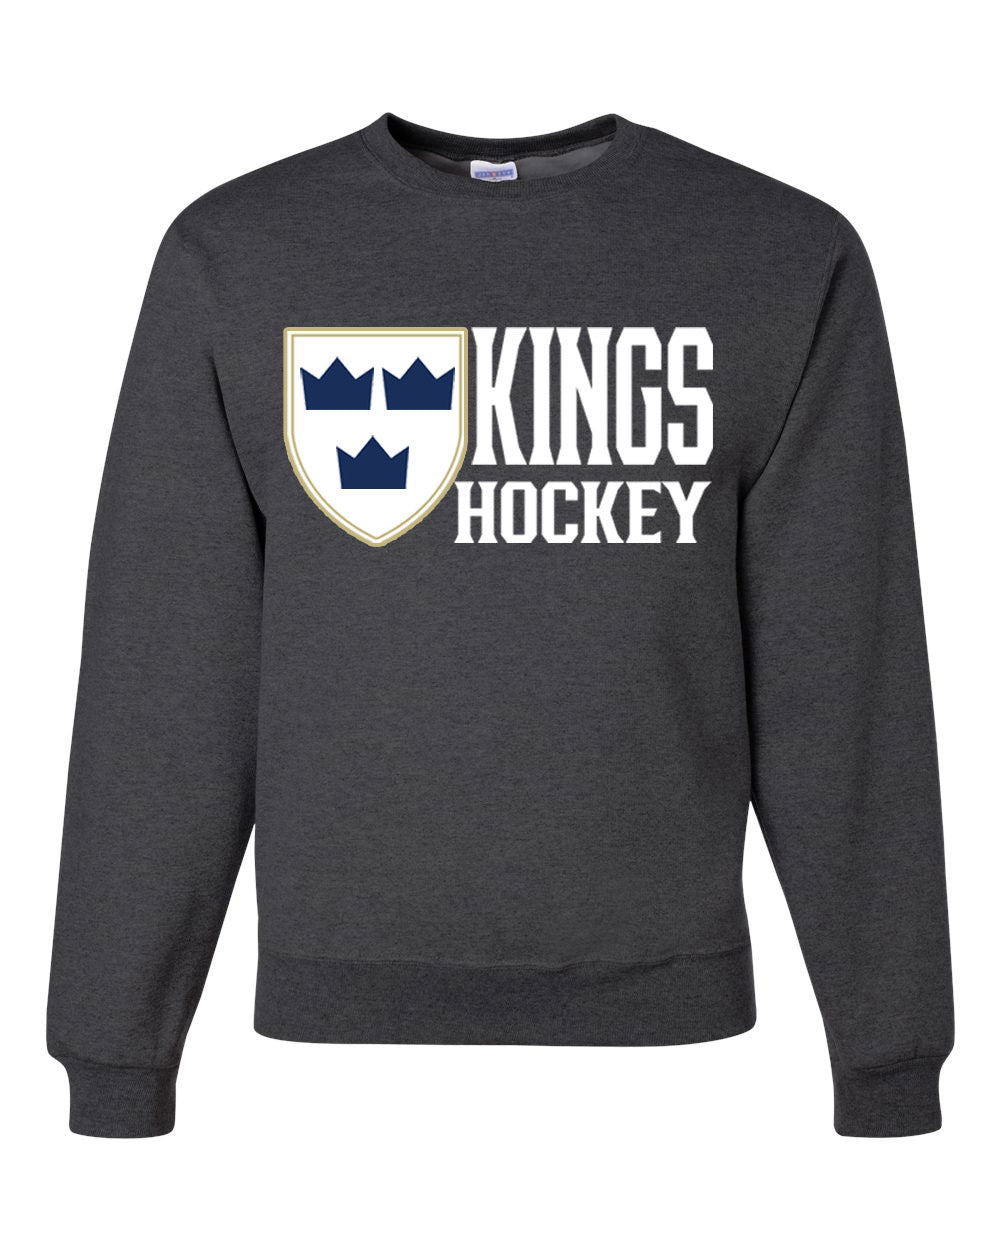 Kings Hockey Design 4 non hooded sweatshirt